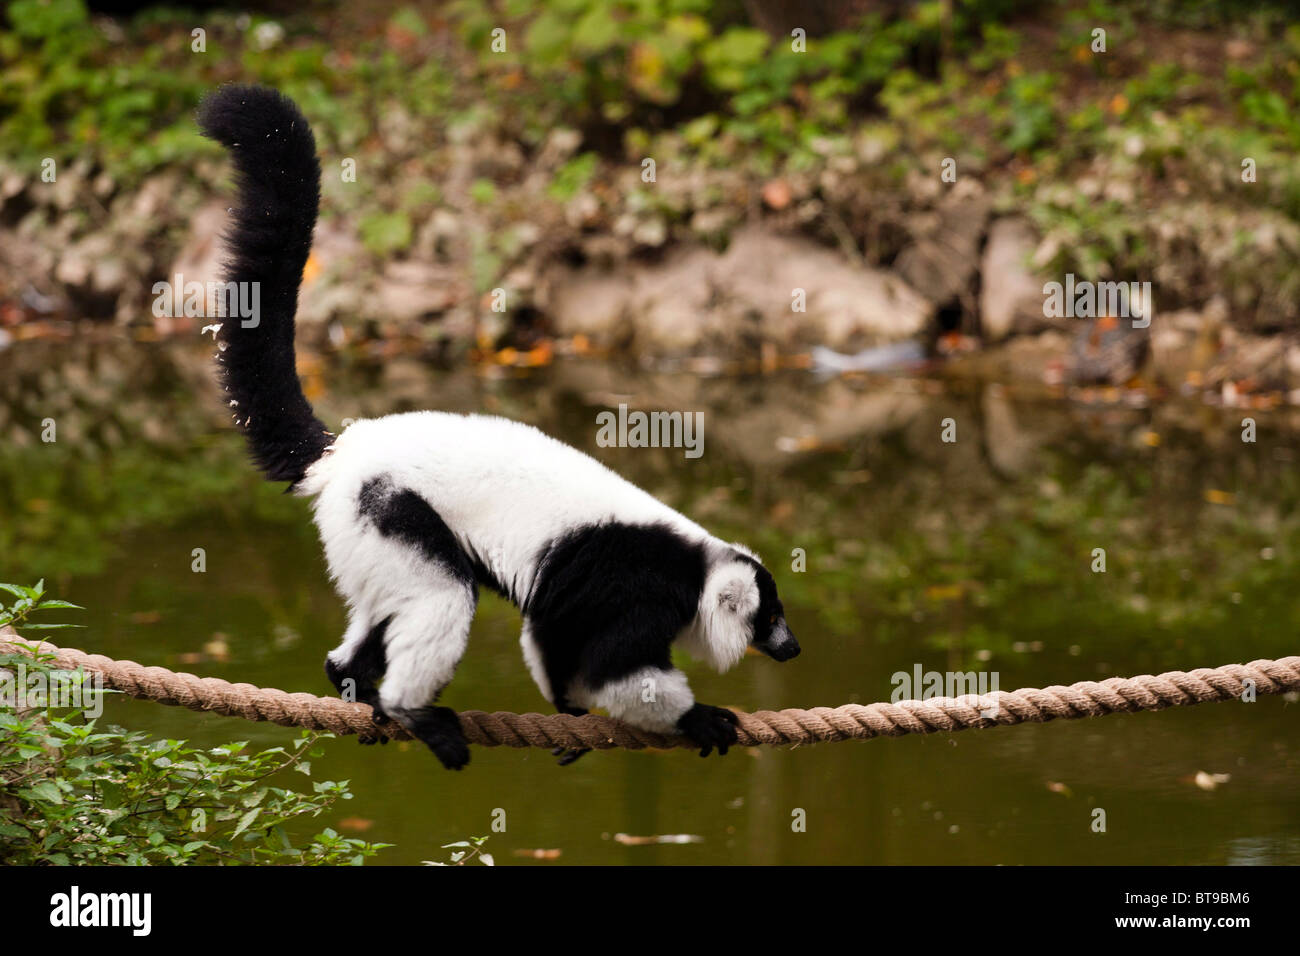 Lemur Überquerung des Flusses auf dem Seil. Stockfoto